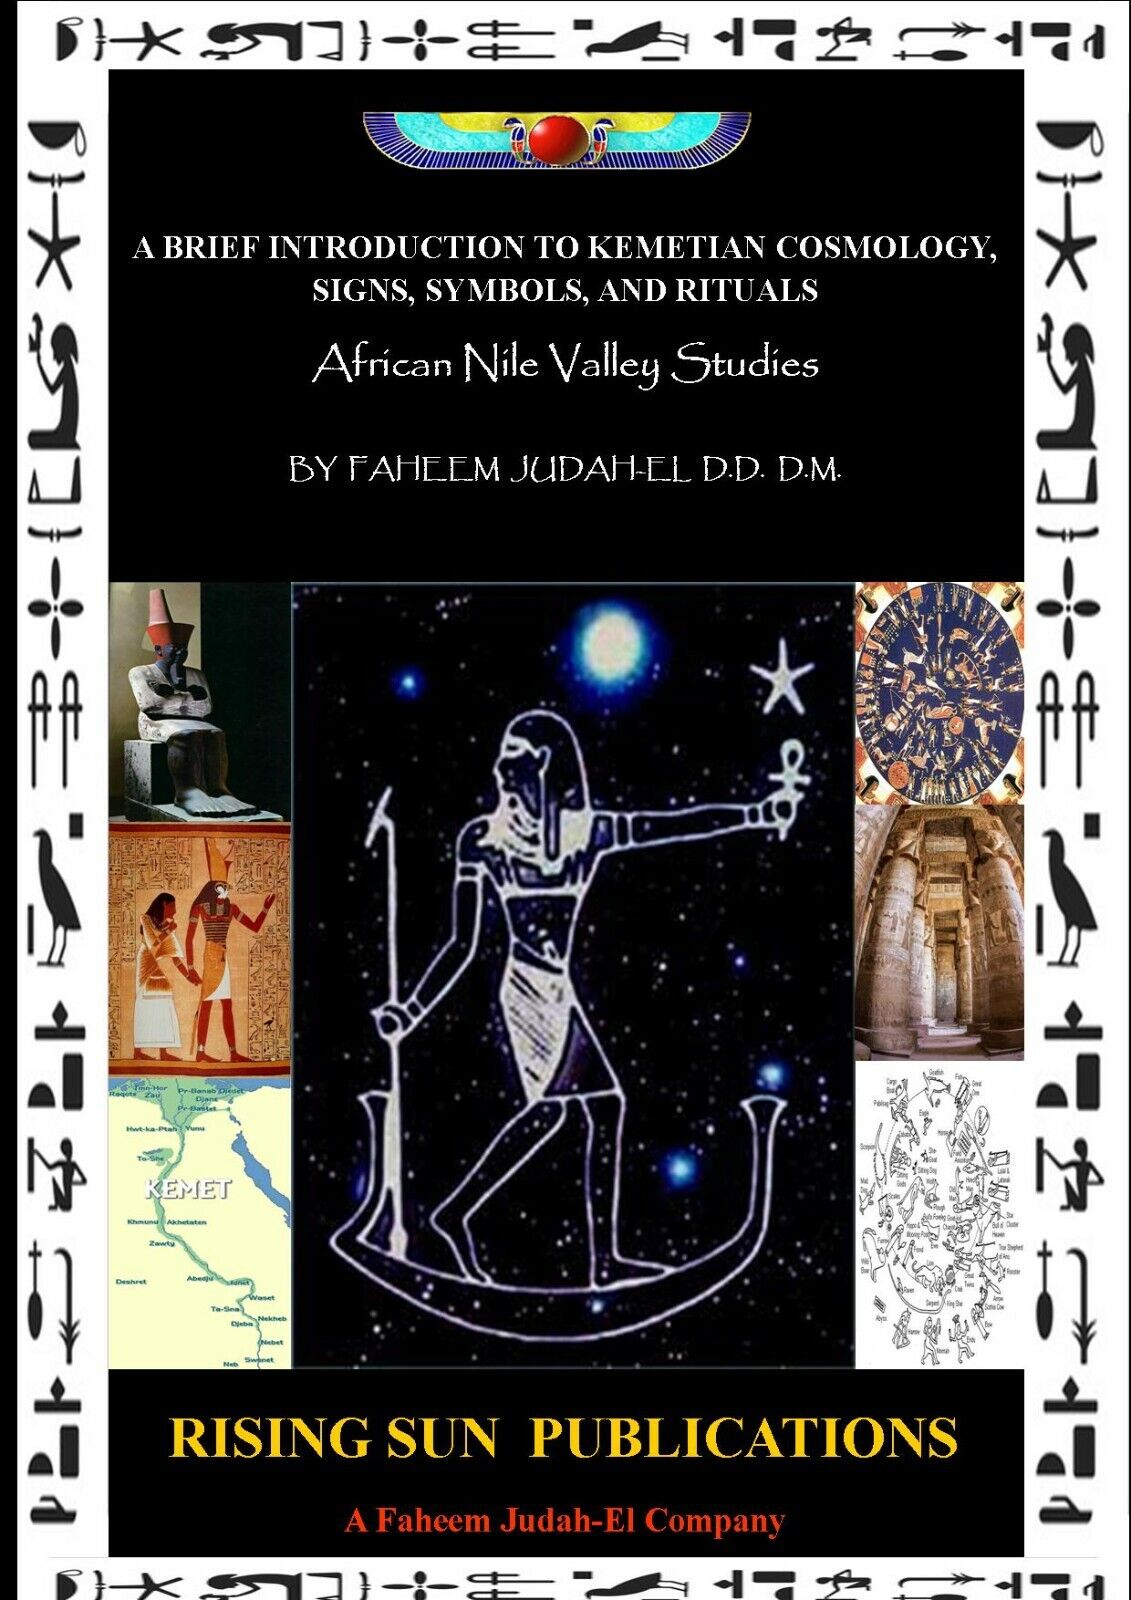 1 left brief introduction to Kemetian Cosmology Dr. Judah-El / Dr. York /Dr. Ben